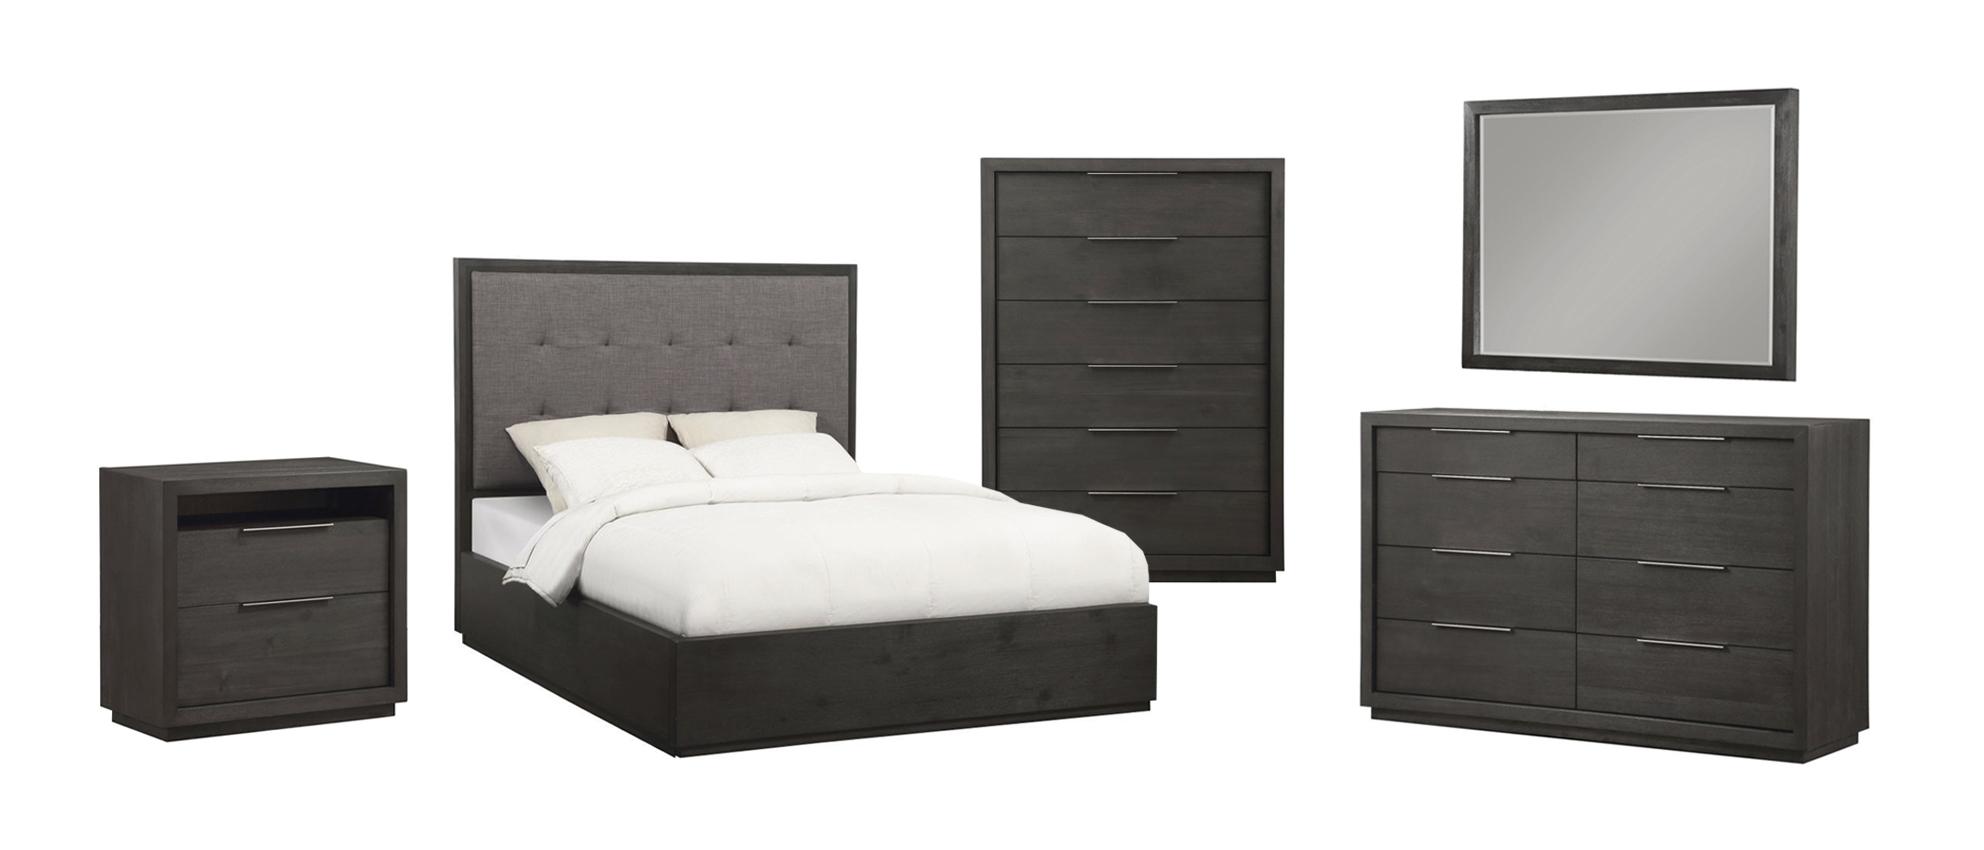 Contemporary Platform Bedroom Set OXFORD AZU5F5D-NDMC-5PC in Dark Gray Fabric